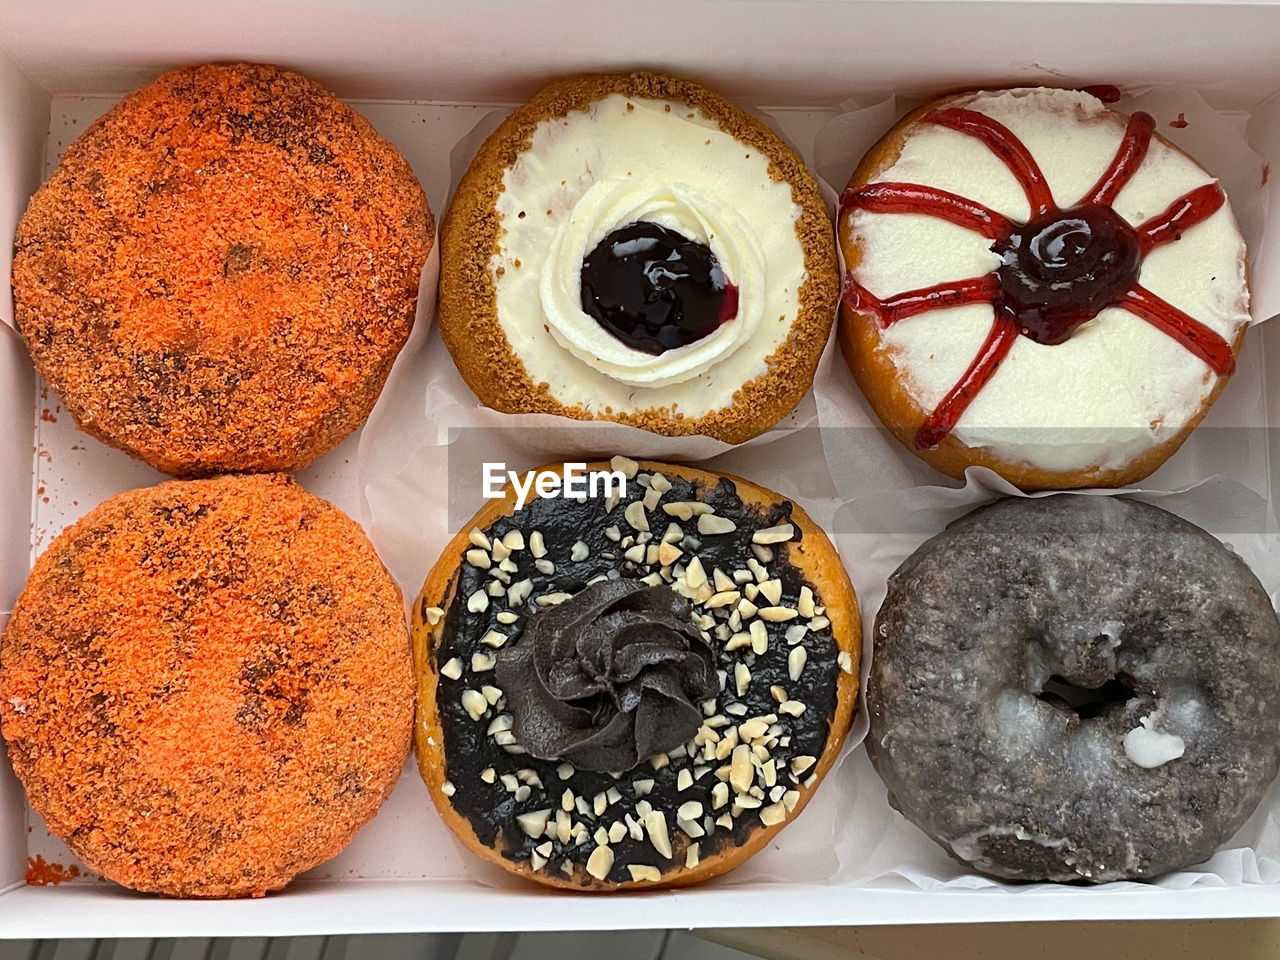 Dunkin donut cravings